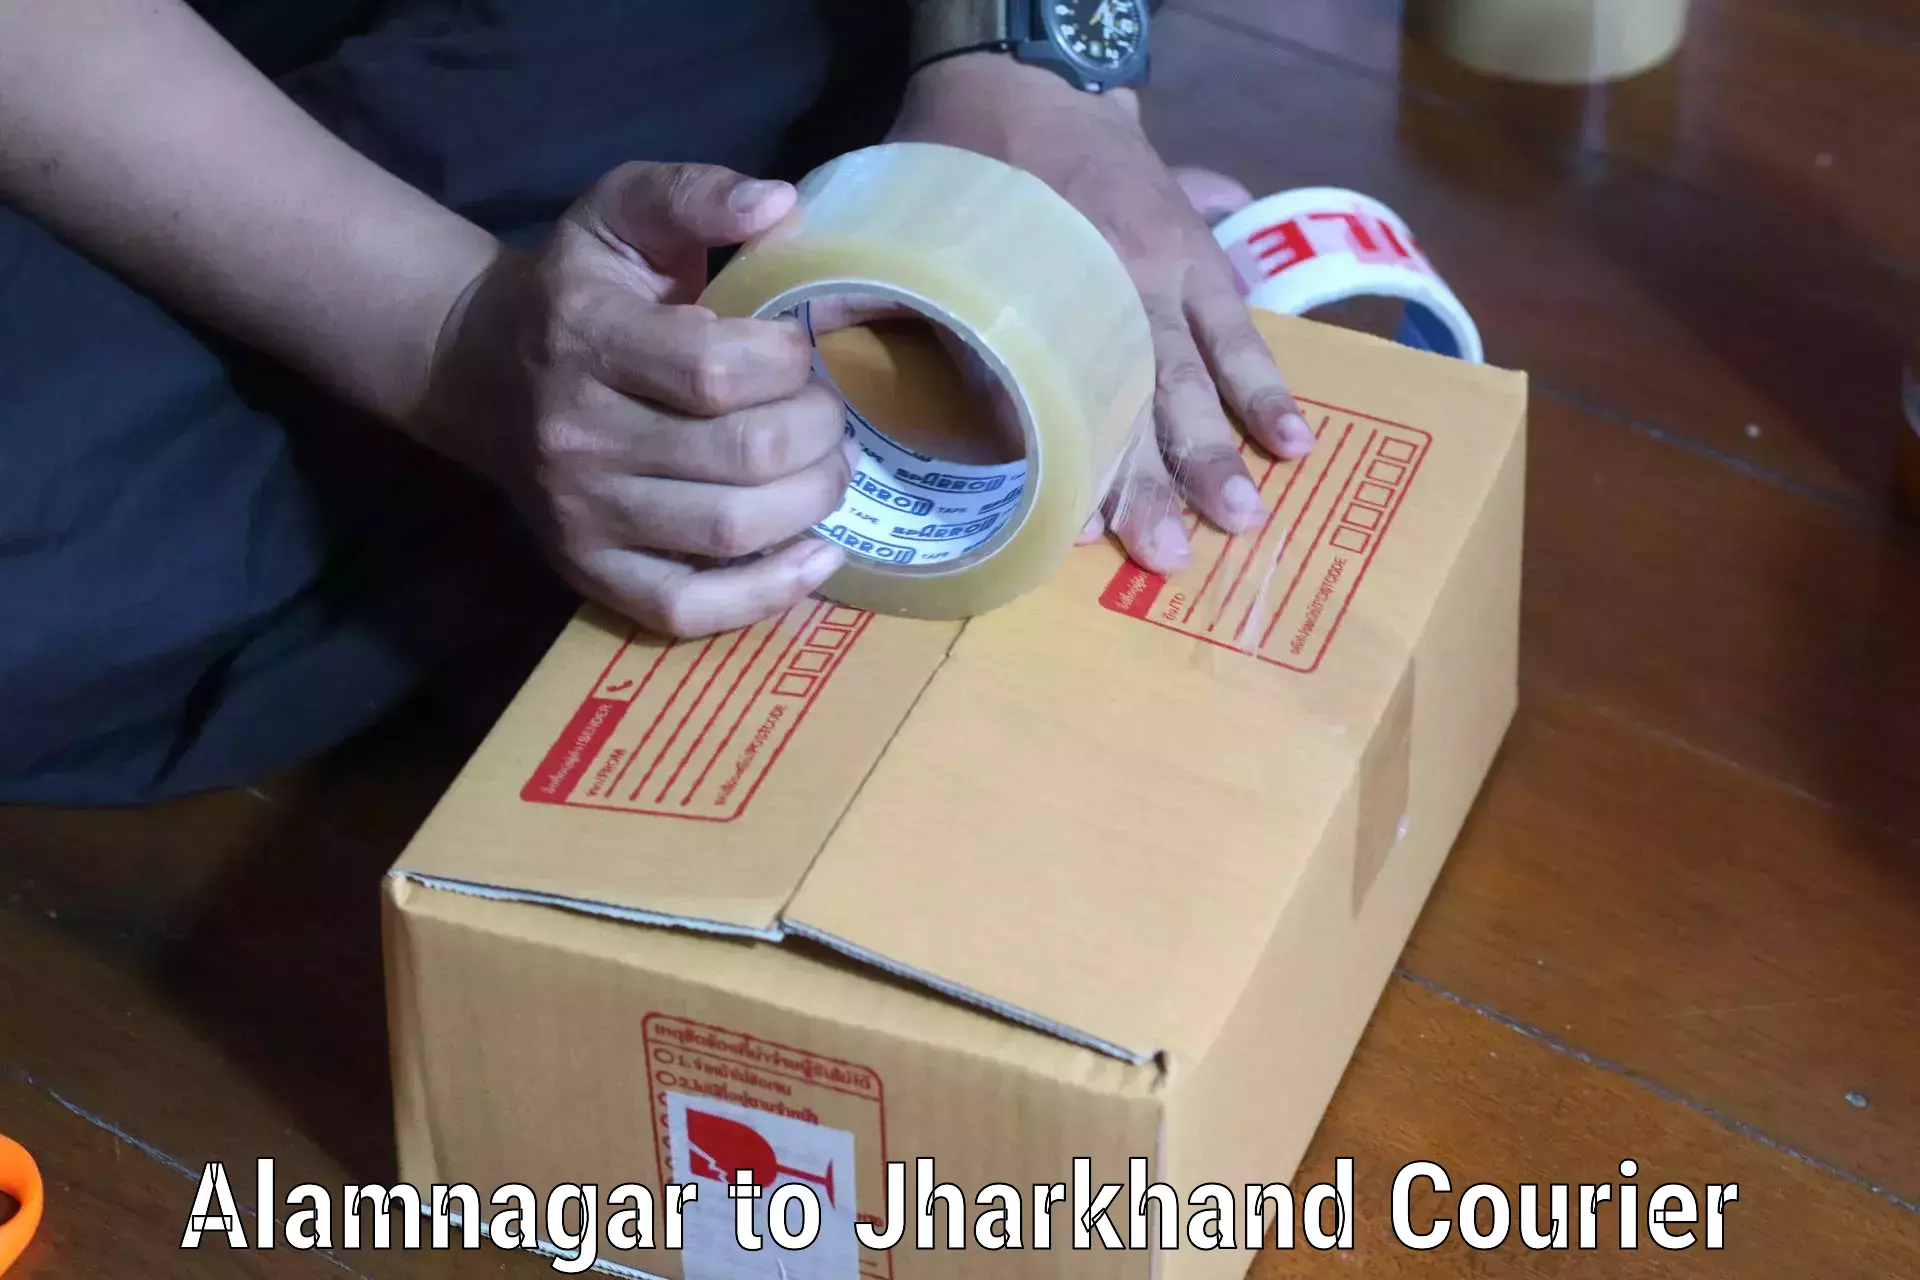 Customer-centric shipping Alamnagar to Jamshedpur